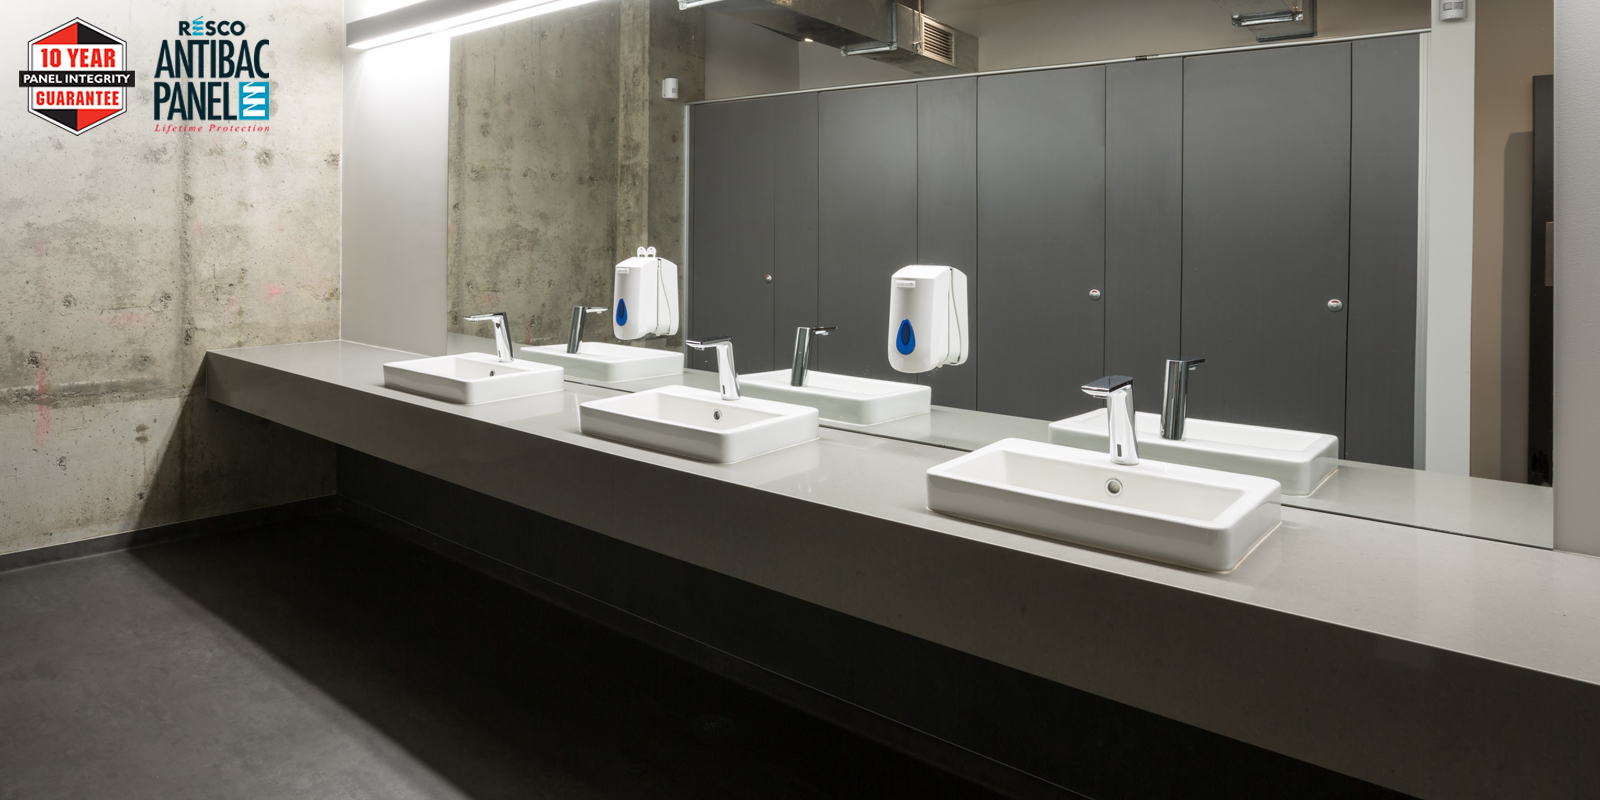 Durable Resco toilet cubicles fit aesthetic in Mediaworks’ floor refurbish.